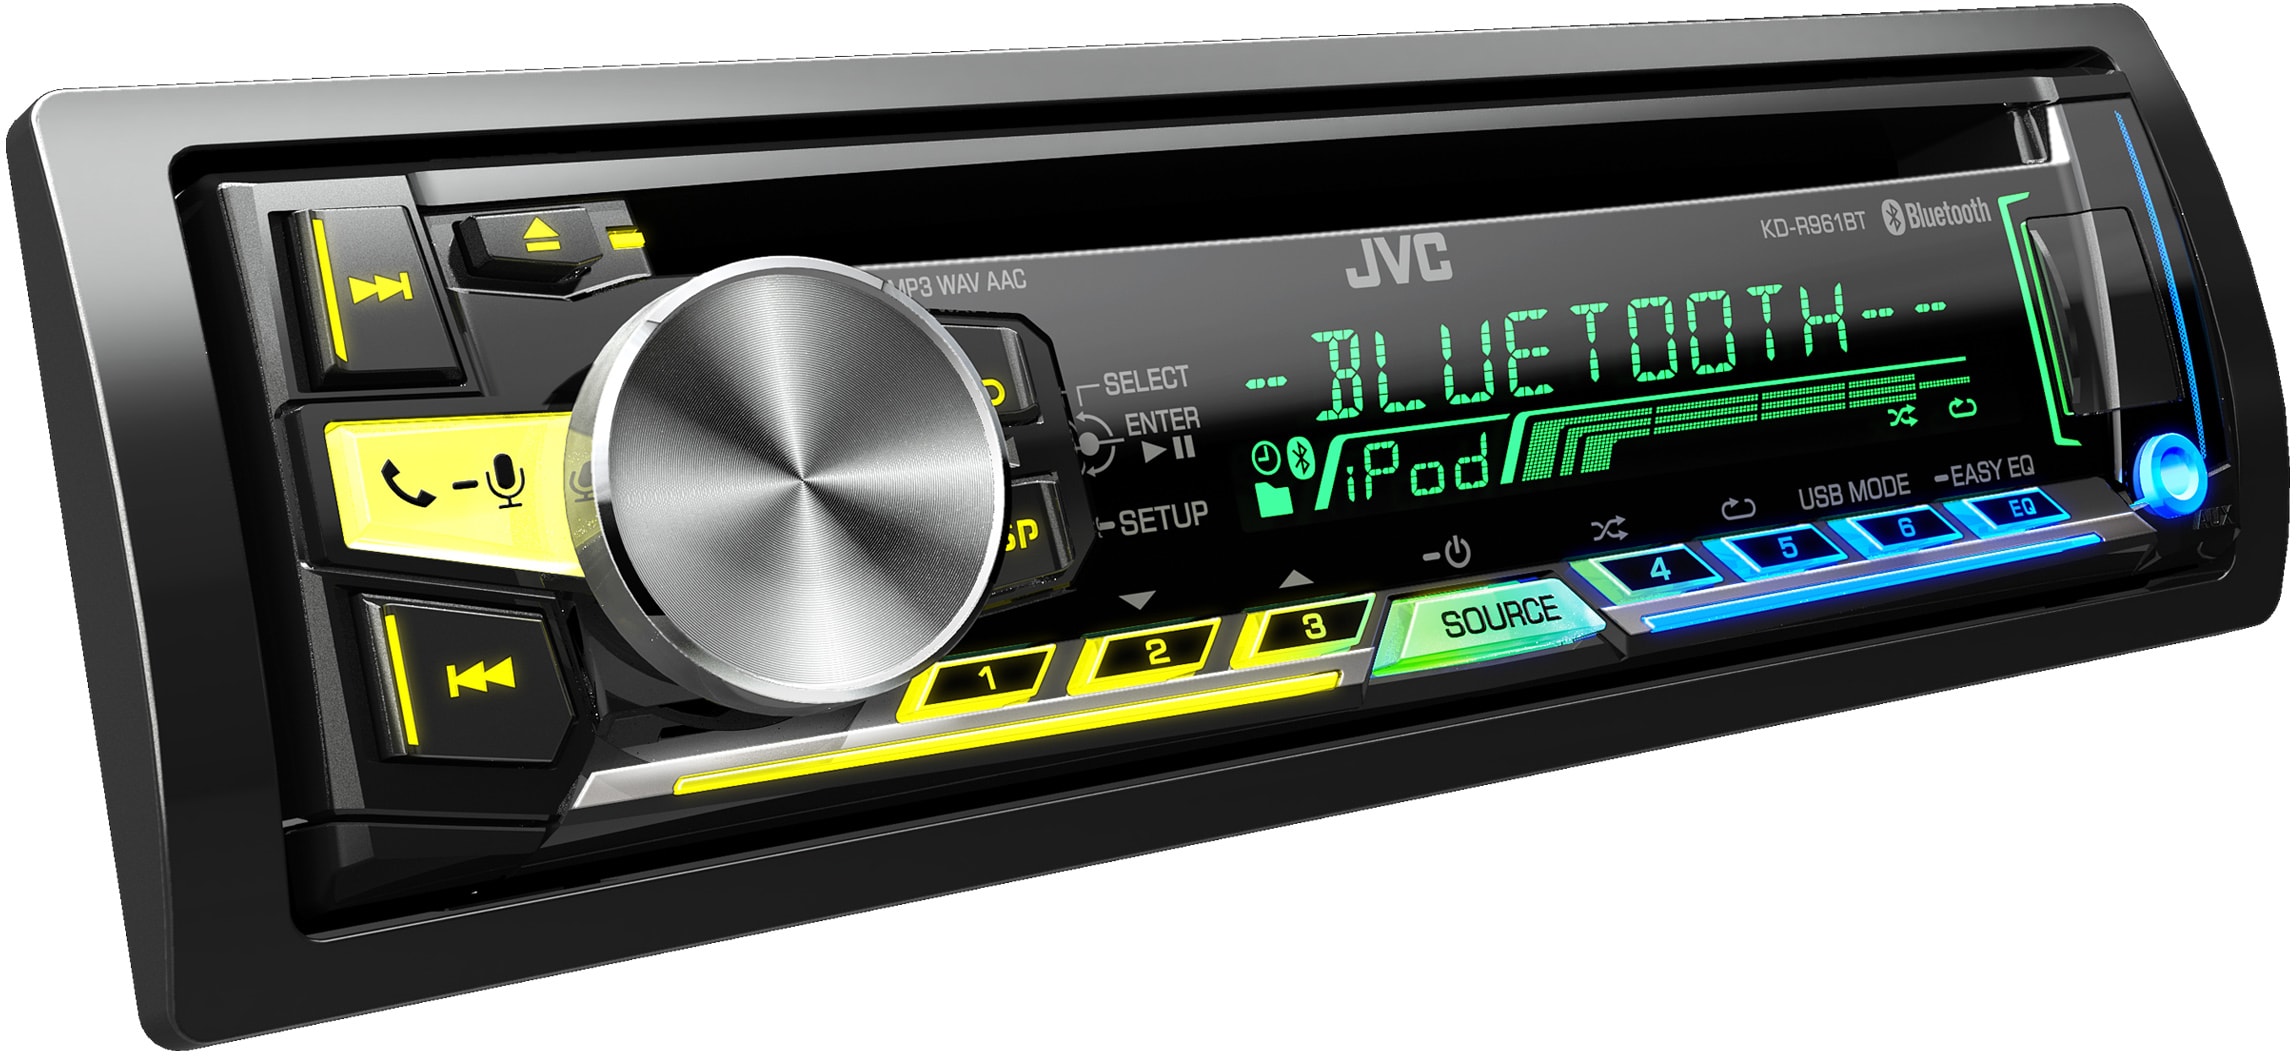 Autoradio CD/USB JVC KD-R961BTE Pas Cher 